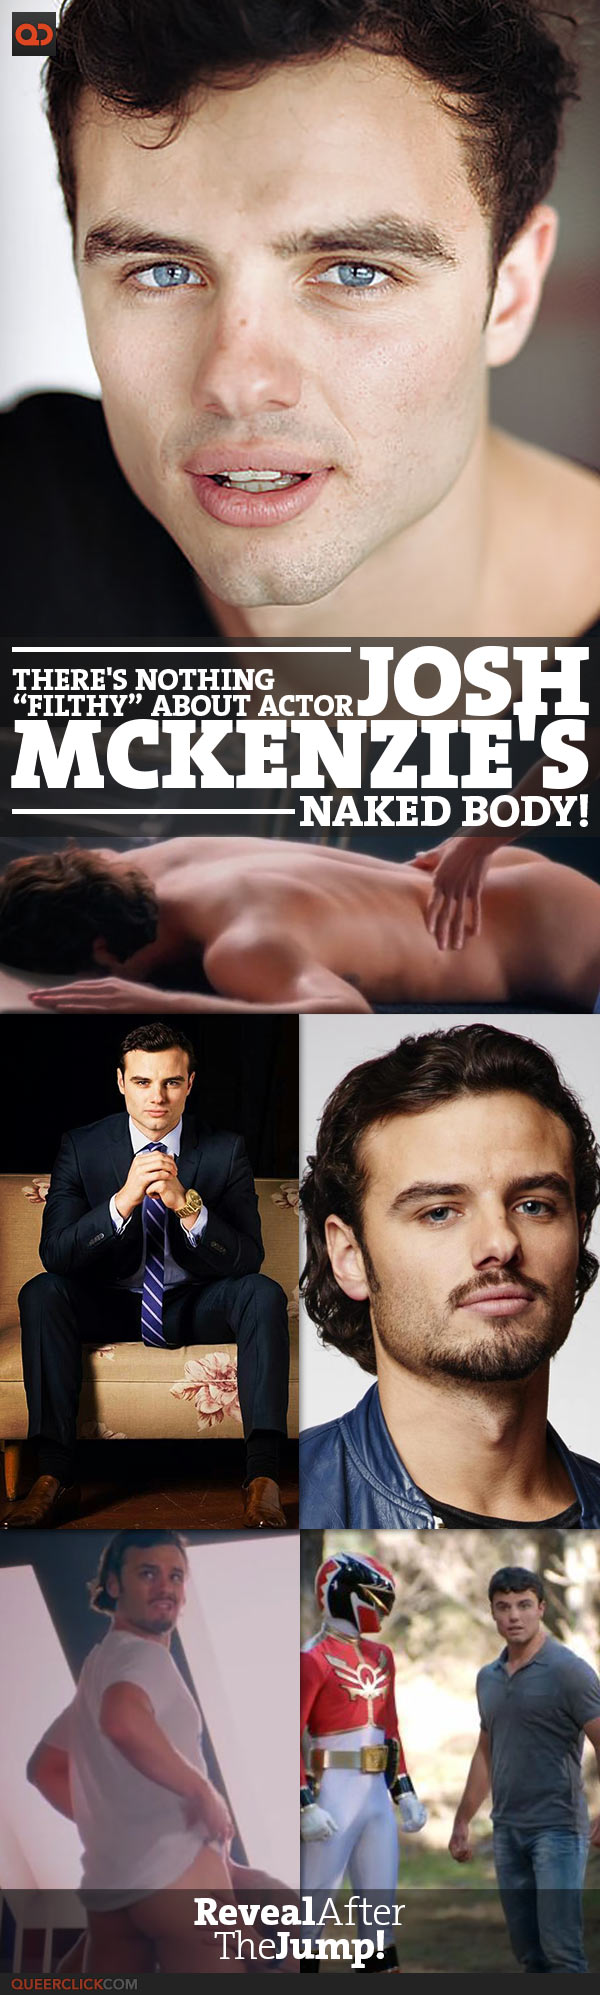 qc-actor_josh_mckenzie_naked_body-teaser